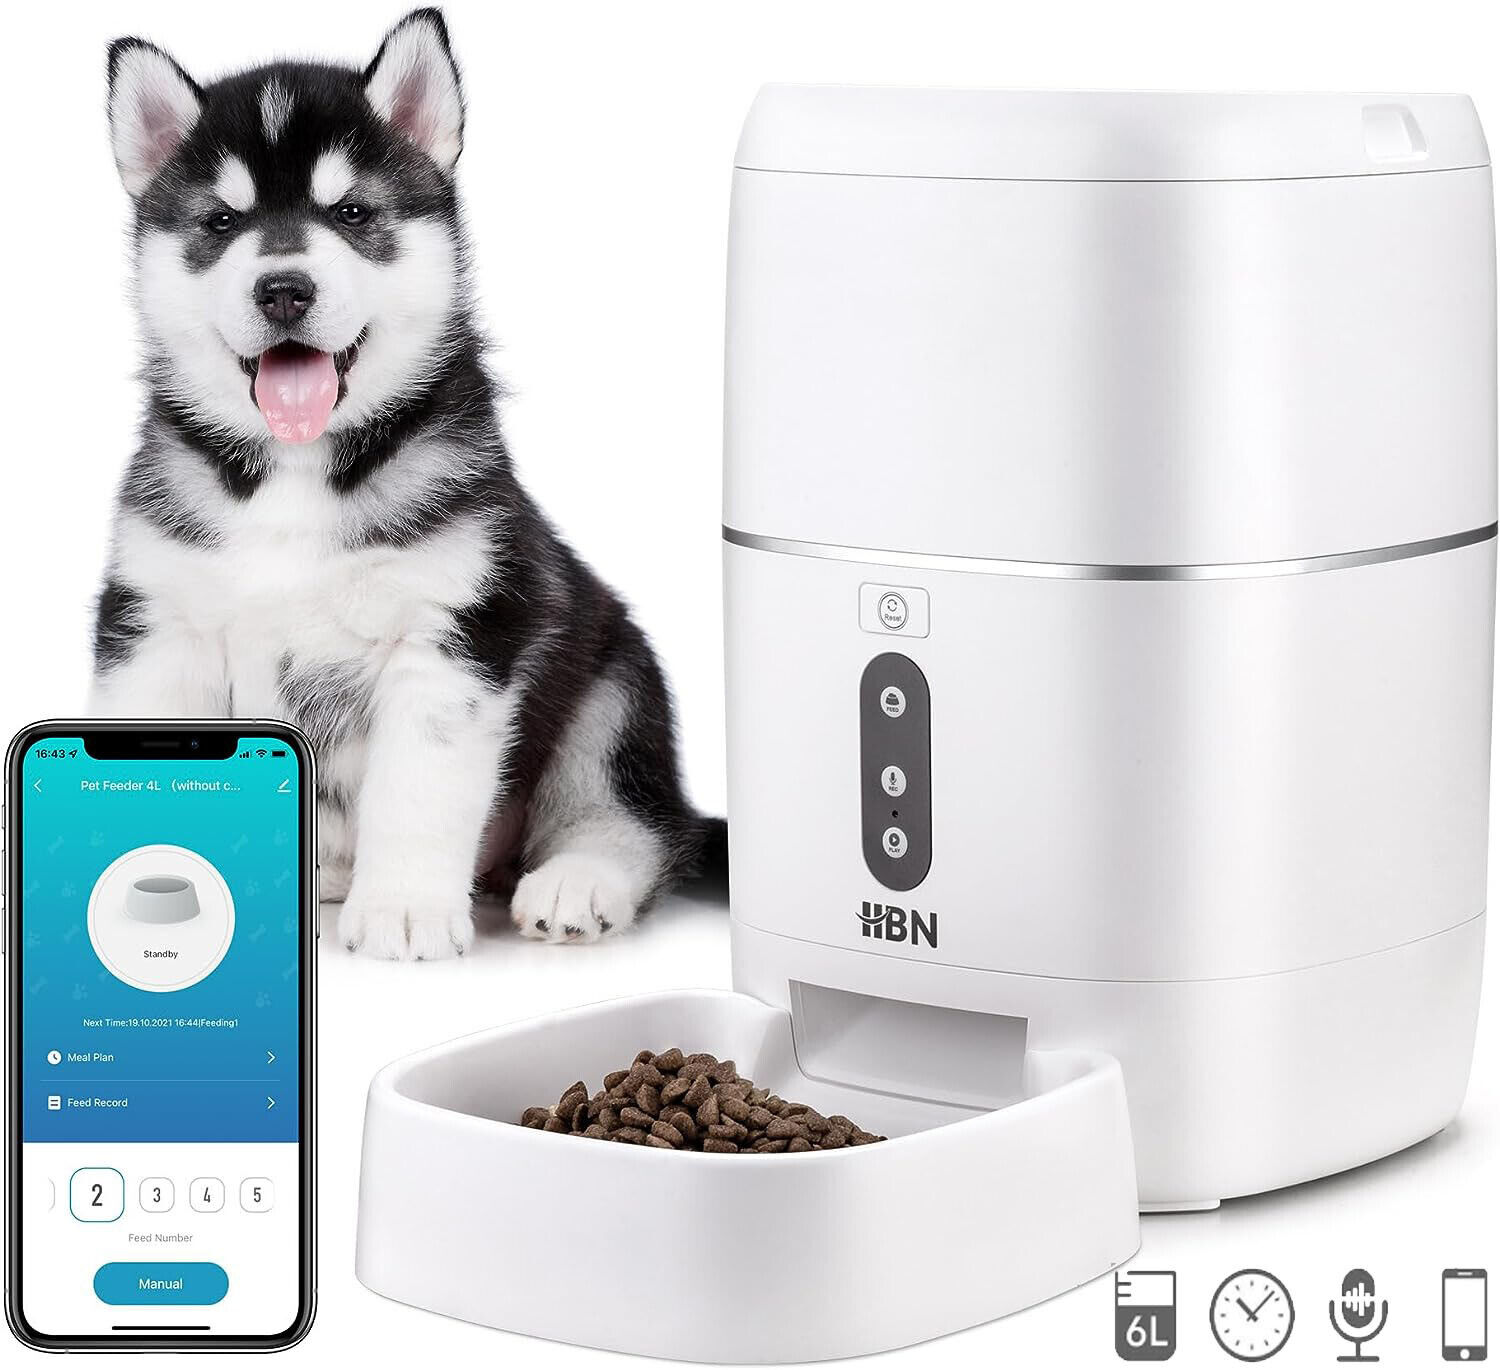 Hbn Smart Pet Feeder 6L, Automatic Food Dispenser 2.4G Wi-Fi Enabled App Control